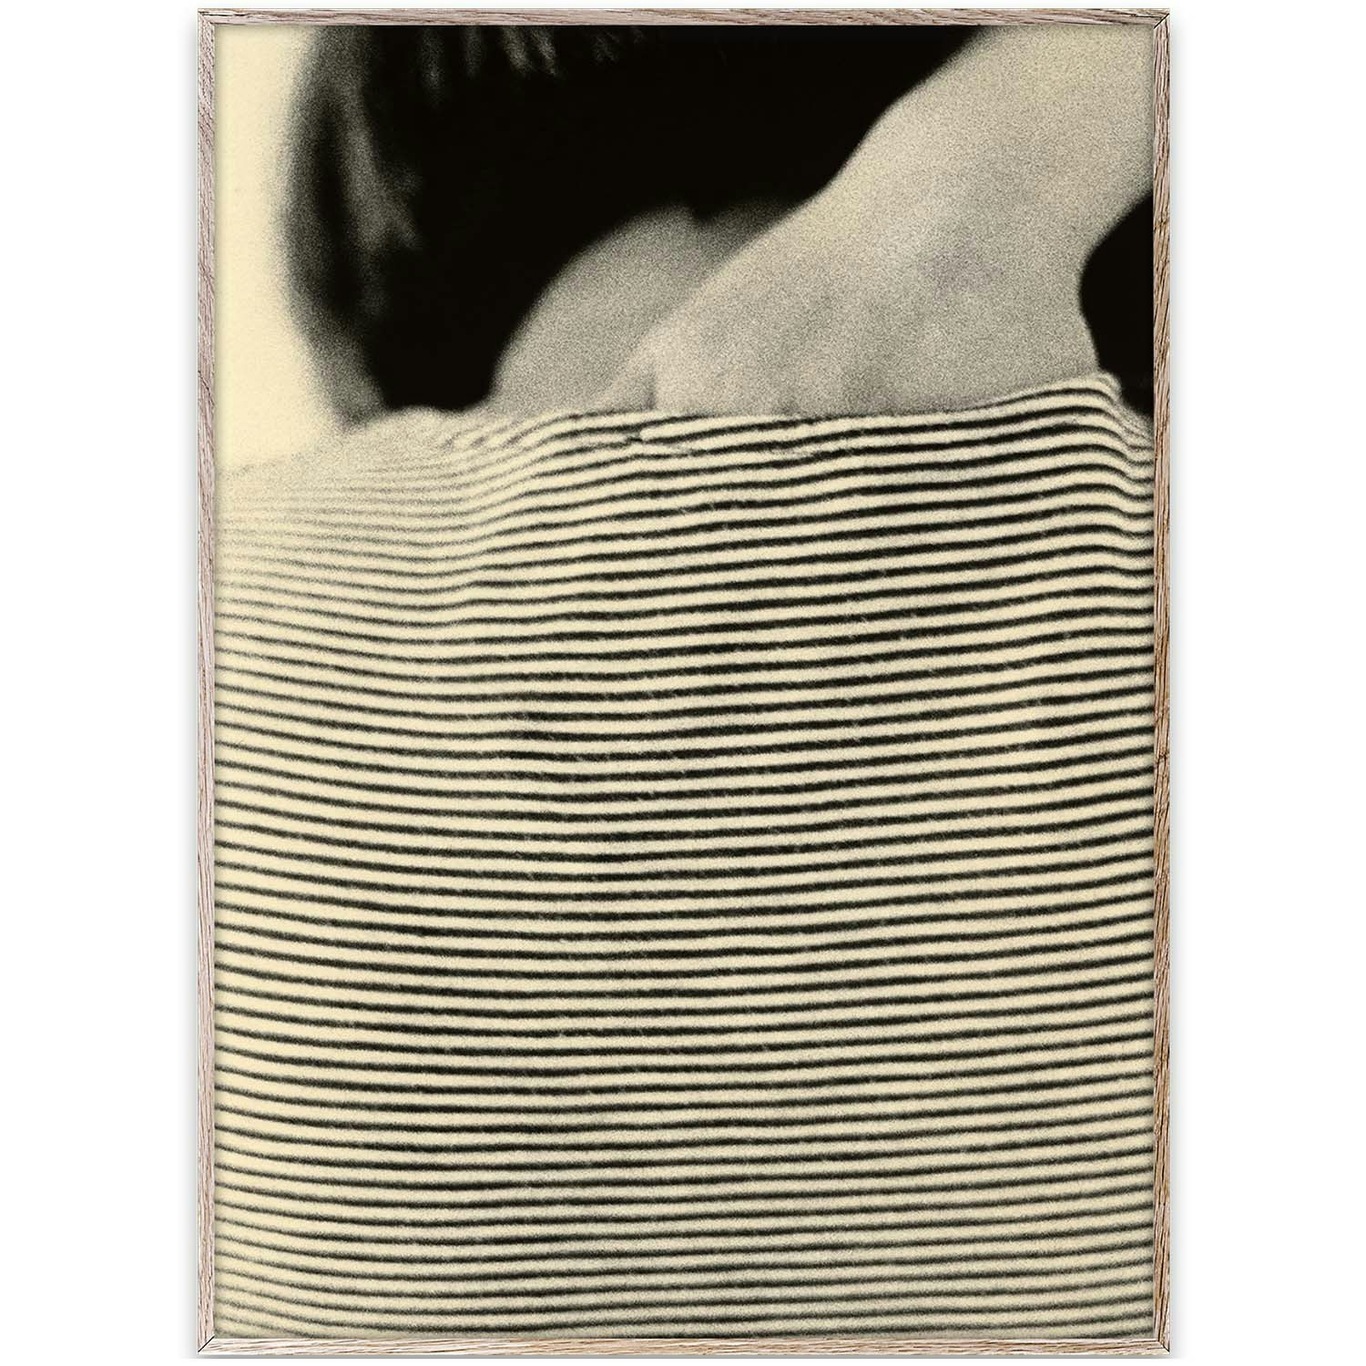 Striped Shirt Poster 30x40 cm